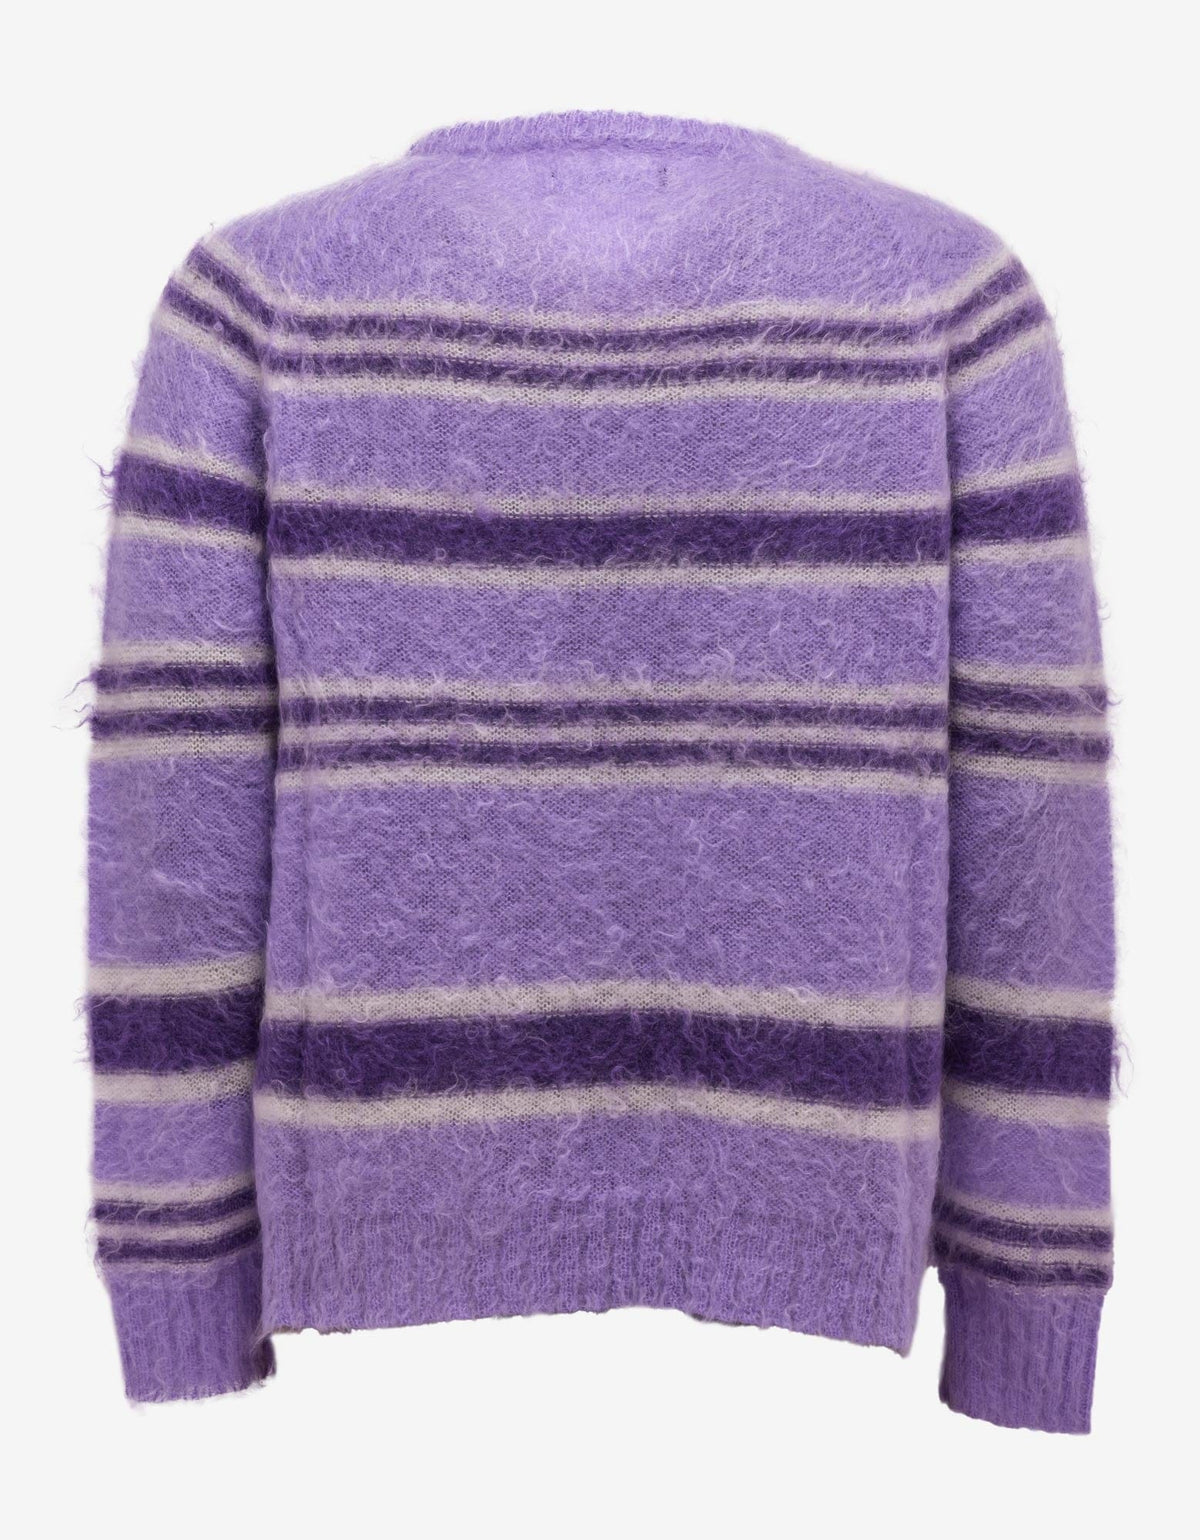 Nahmias Nahmias Purple Striped Knit Sweater